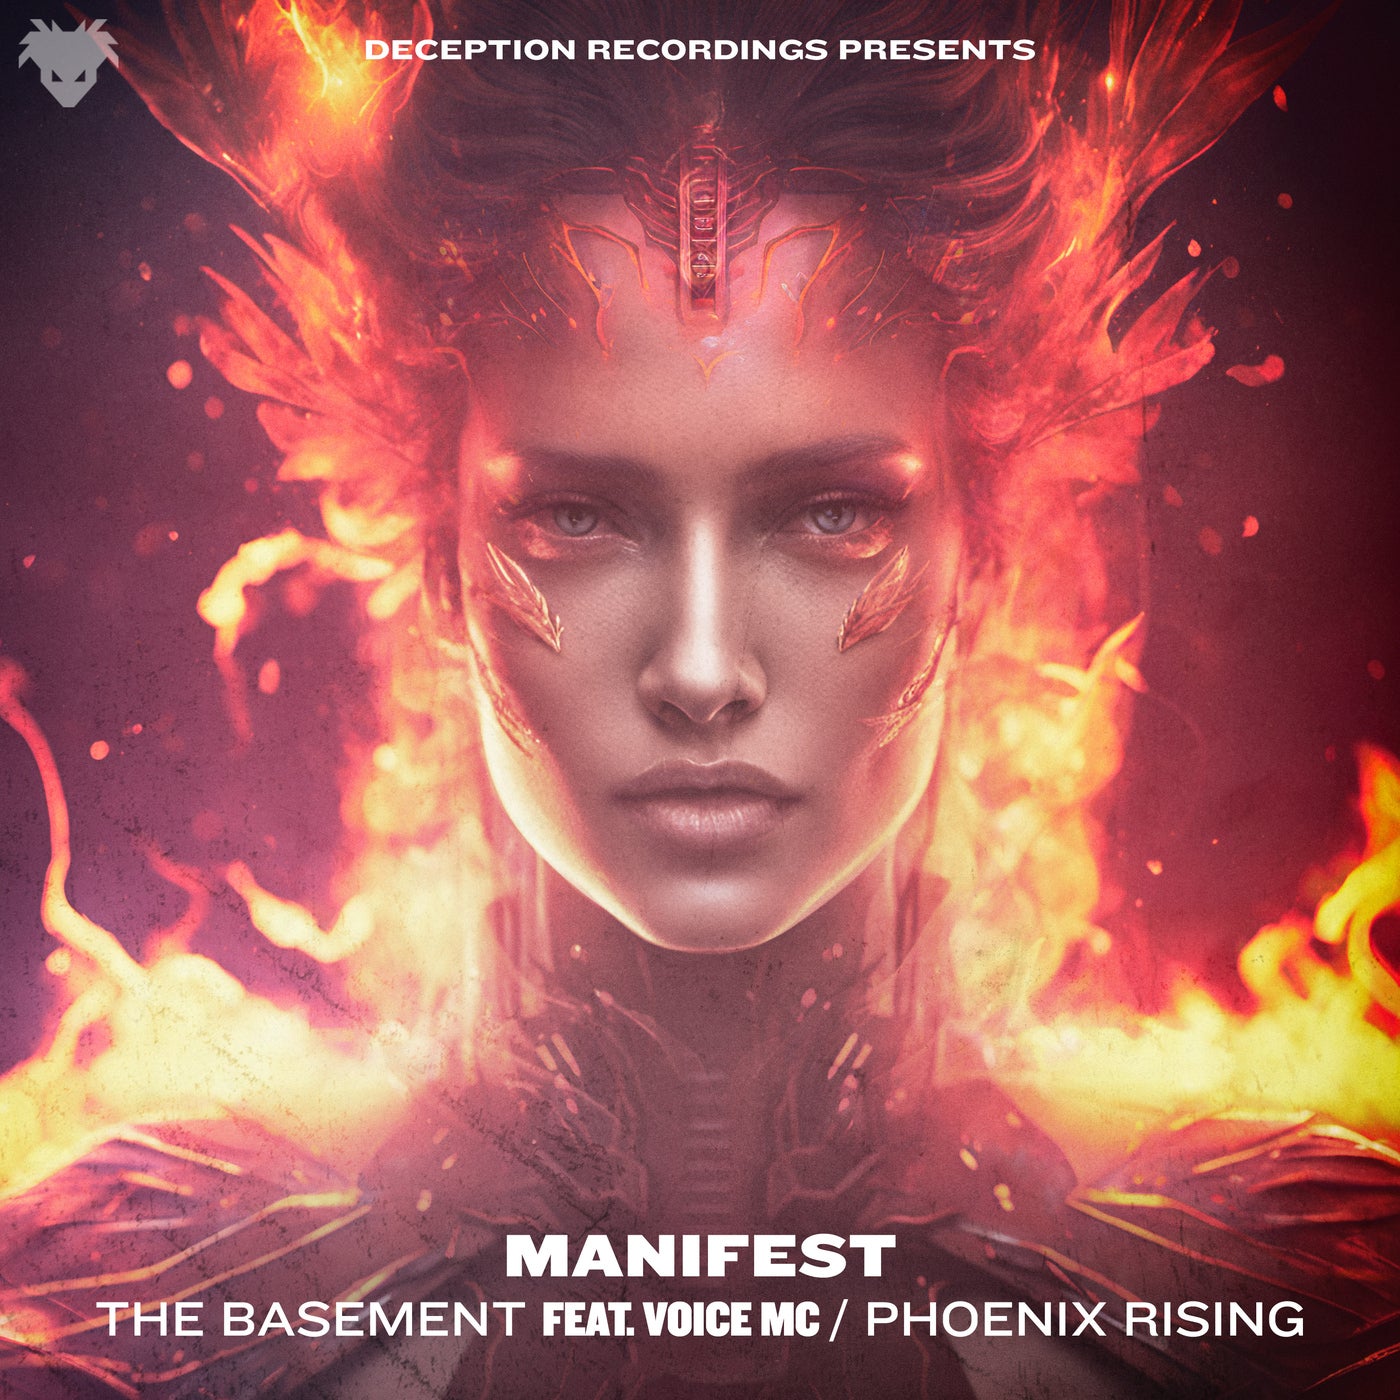 The Basement Feat: Voice MC | Phoenix Rising